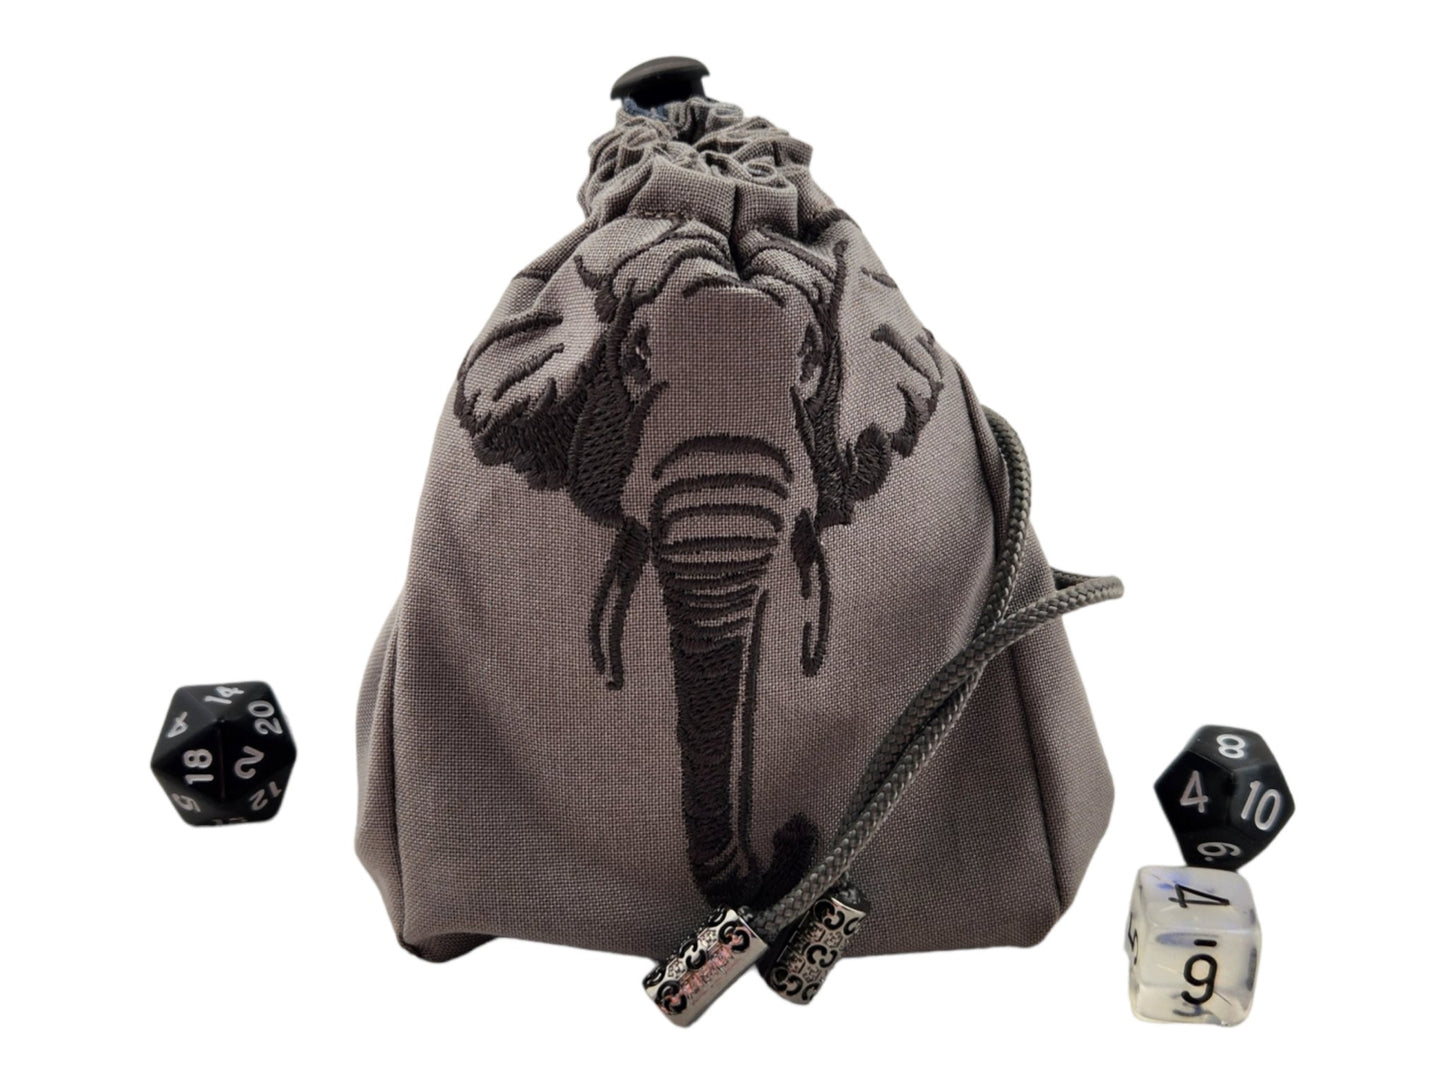 Elephant dice bag - Rowan Gate